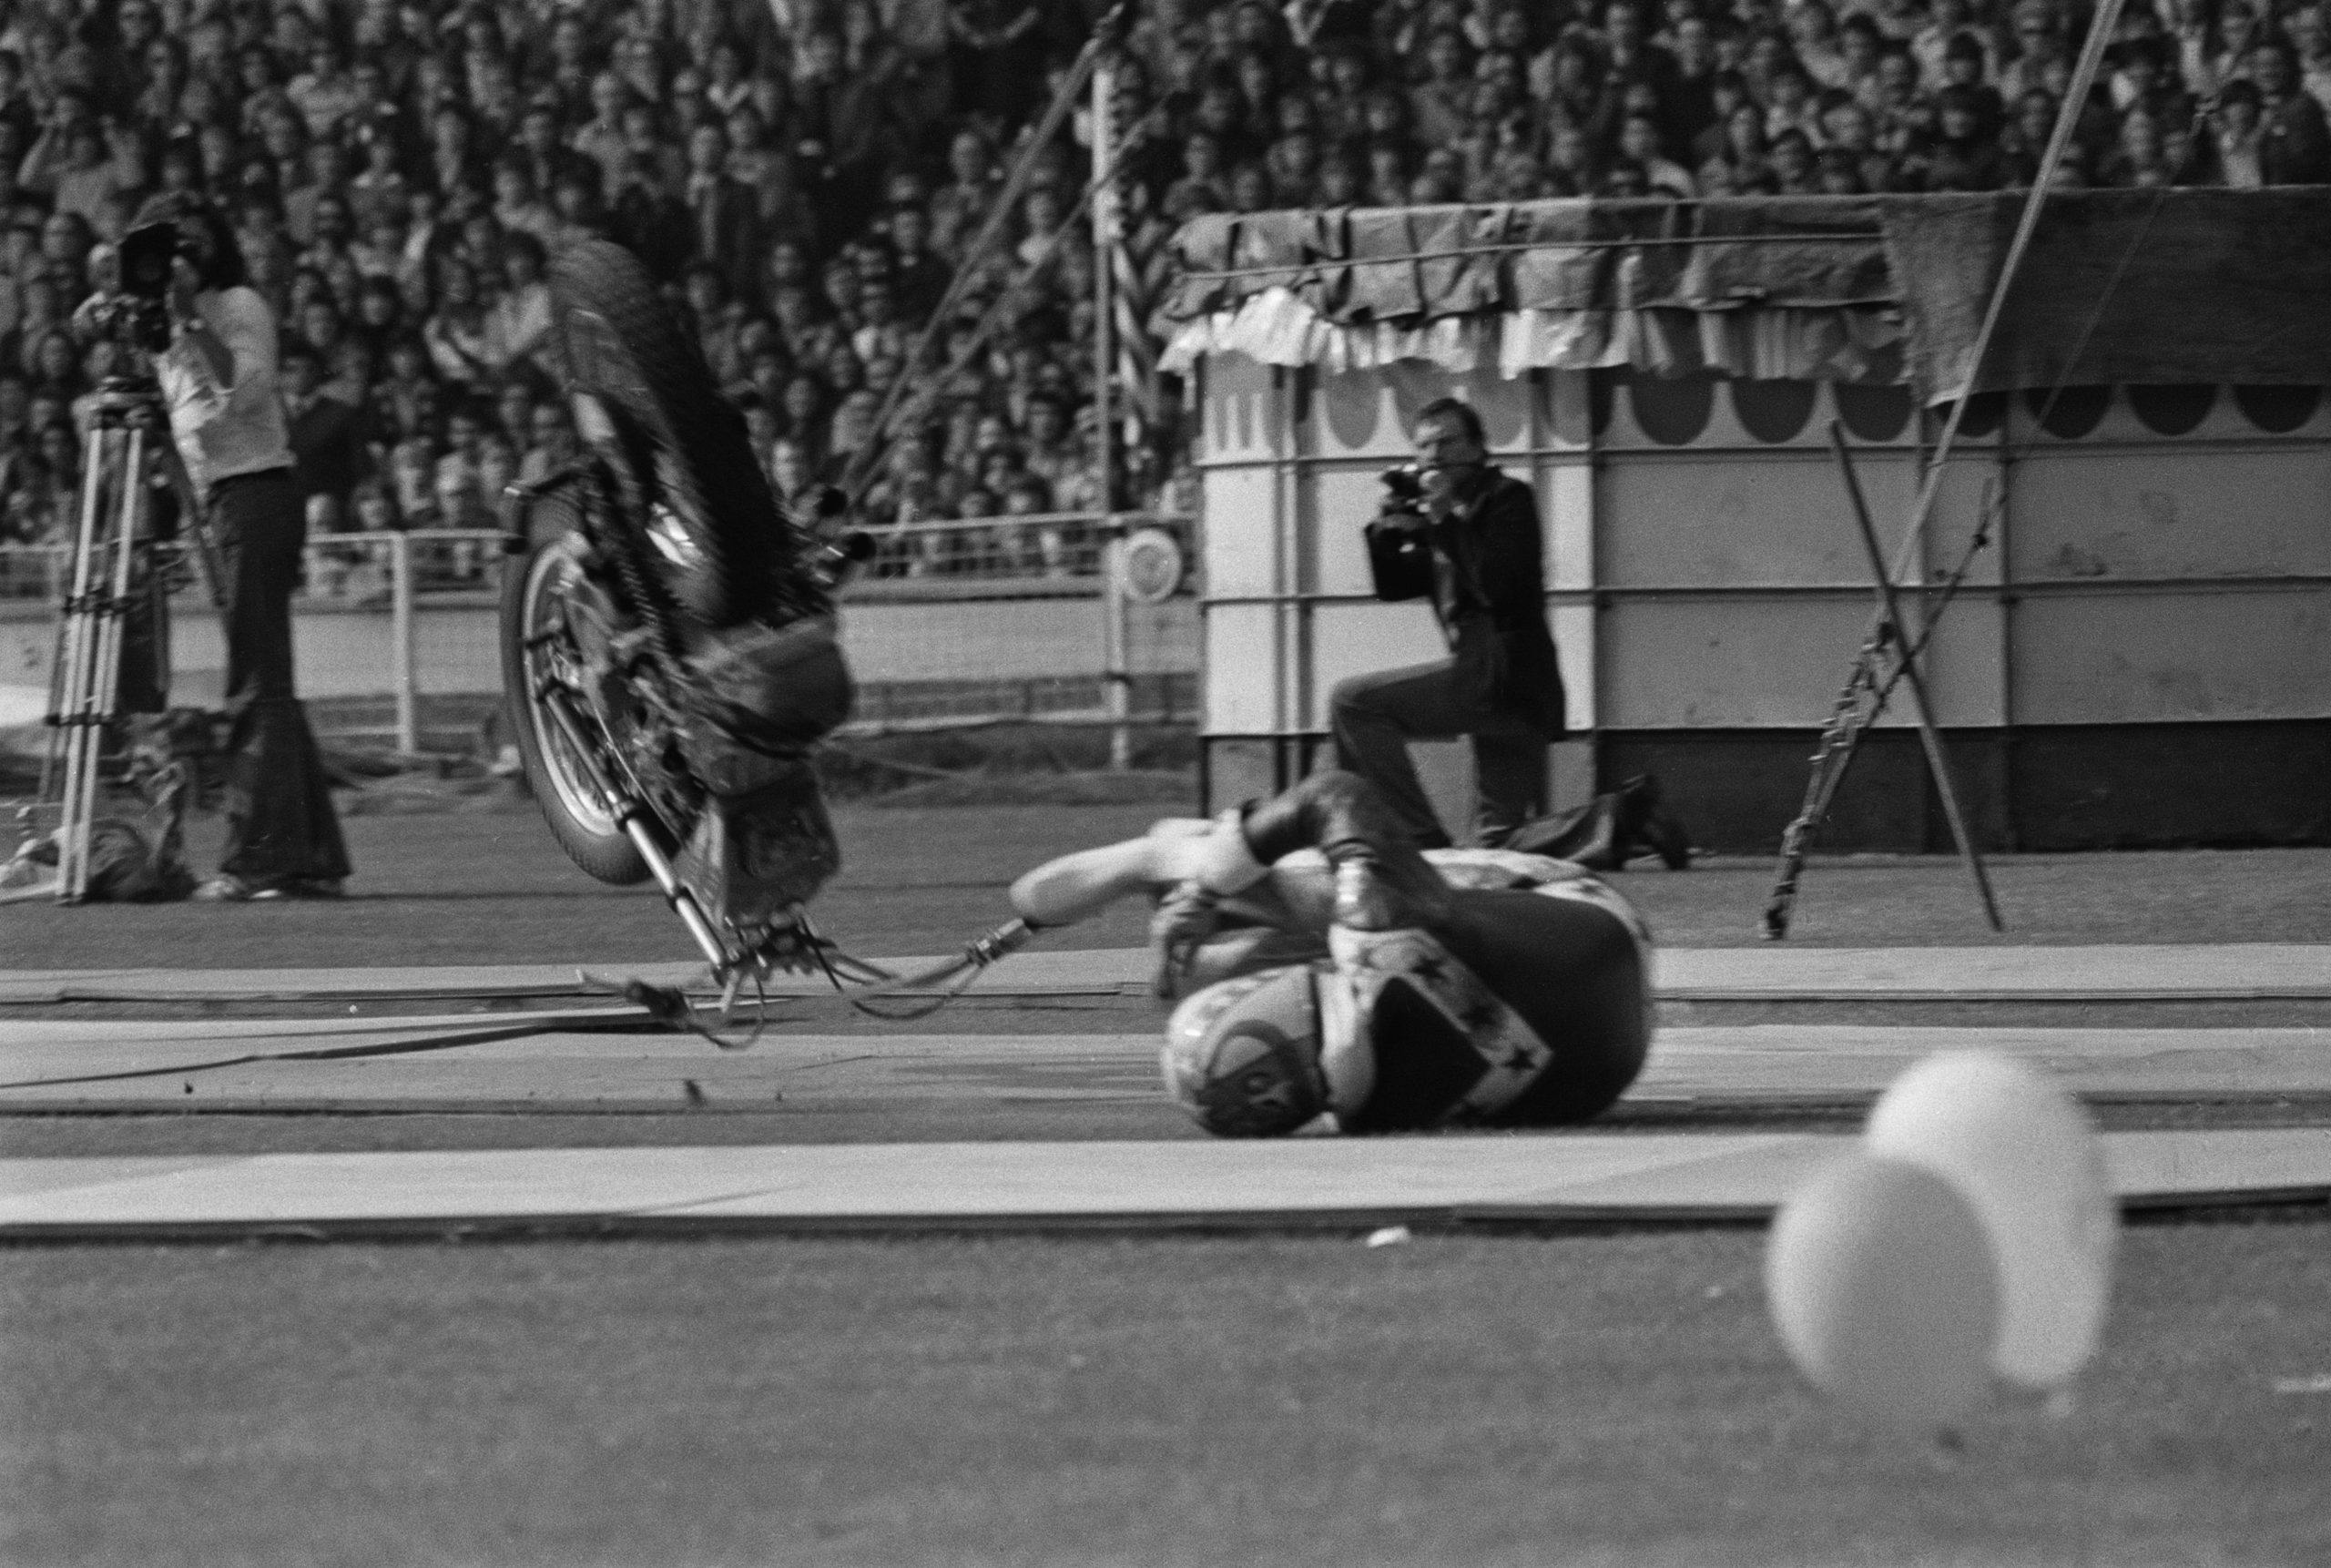 Evel Knievel Landing off his Motorcycle Wembley Crash